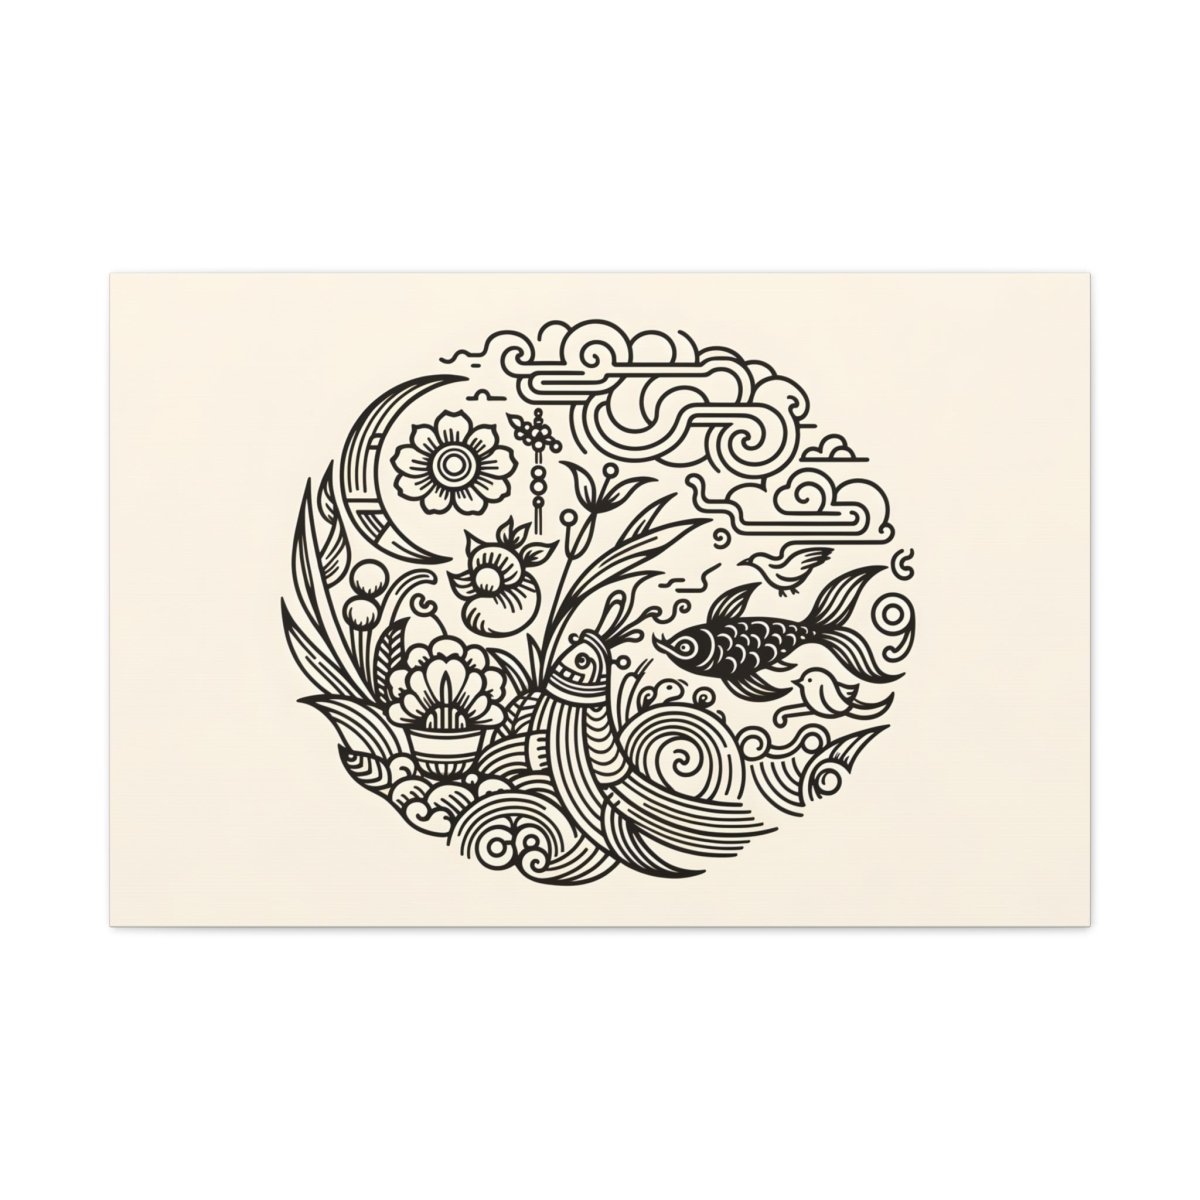 Enchanted Garden: Whimsical Nature Circular Art Print - Chinese Folk Art - Neodigitalis Artimata